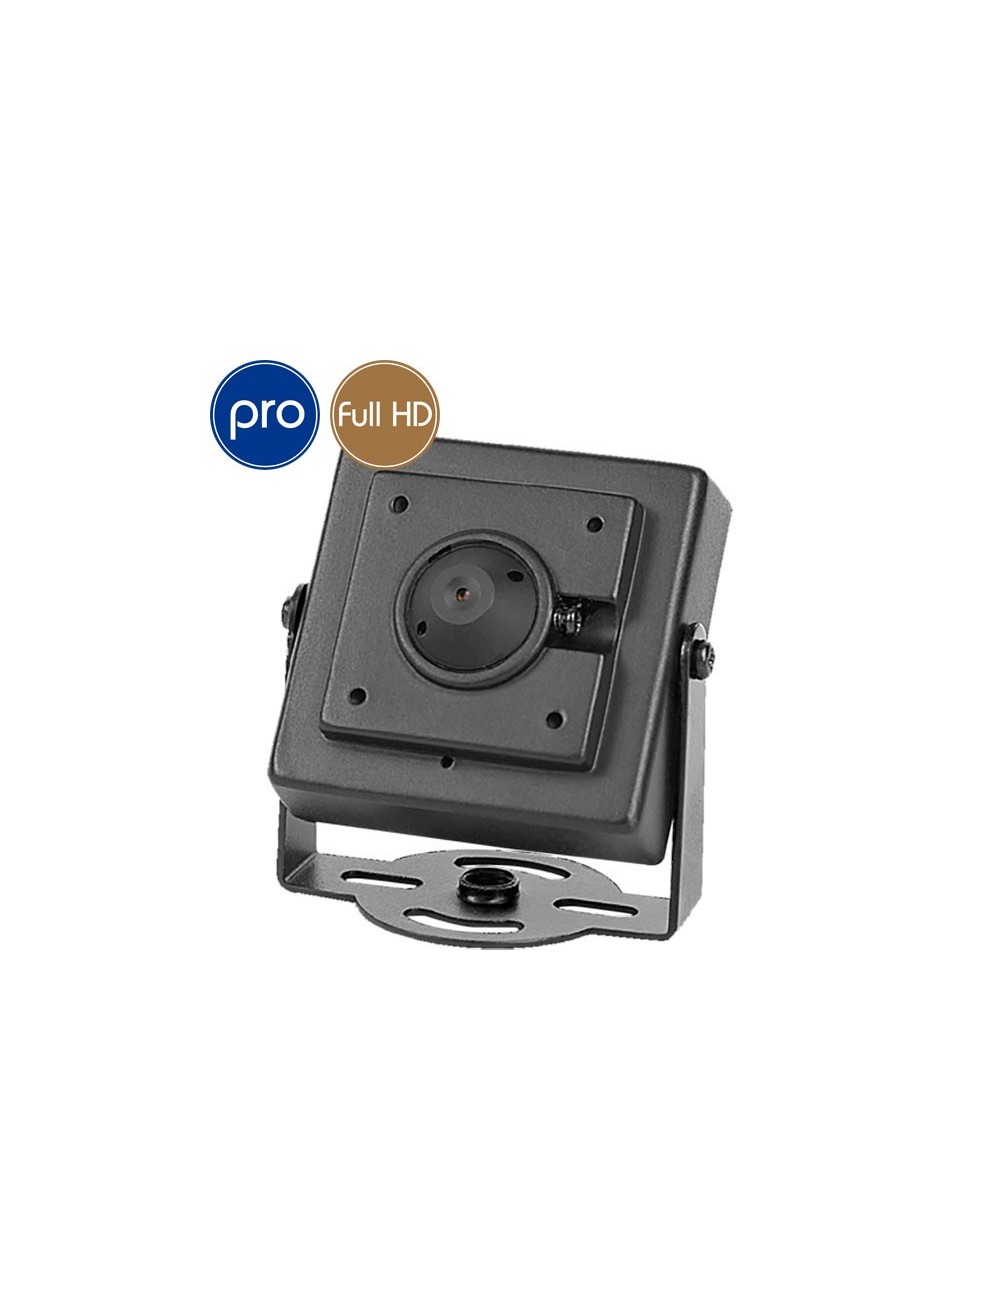 HD microcamera PRO - 1080p SONY - 2 Megapixel